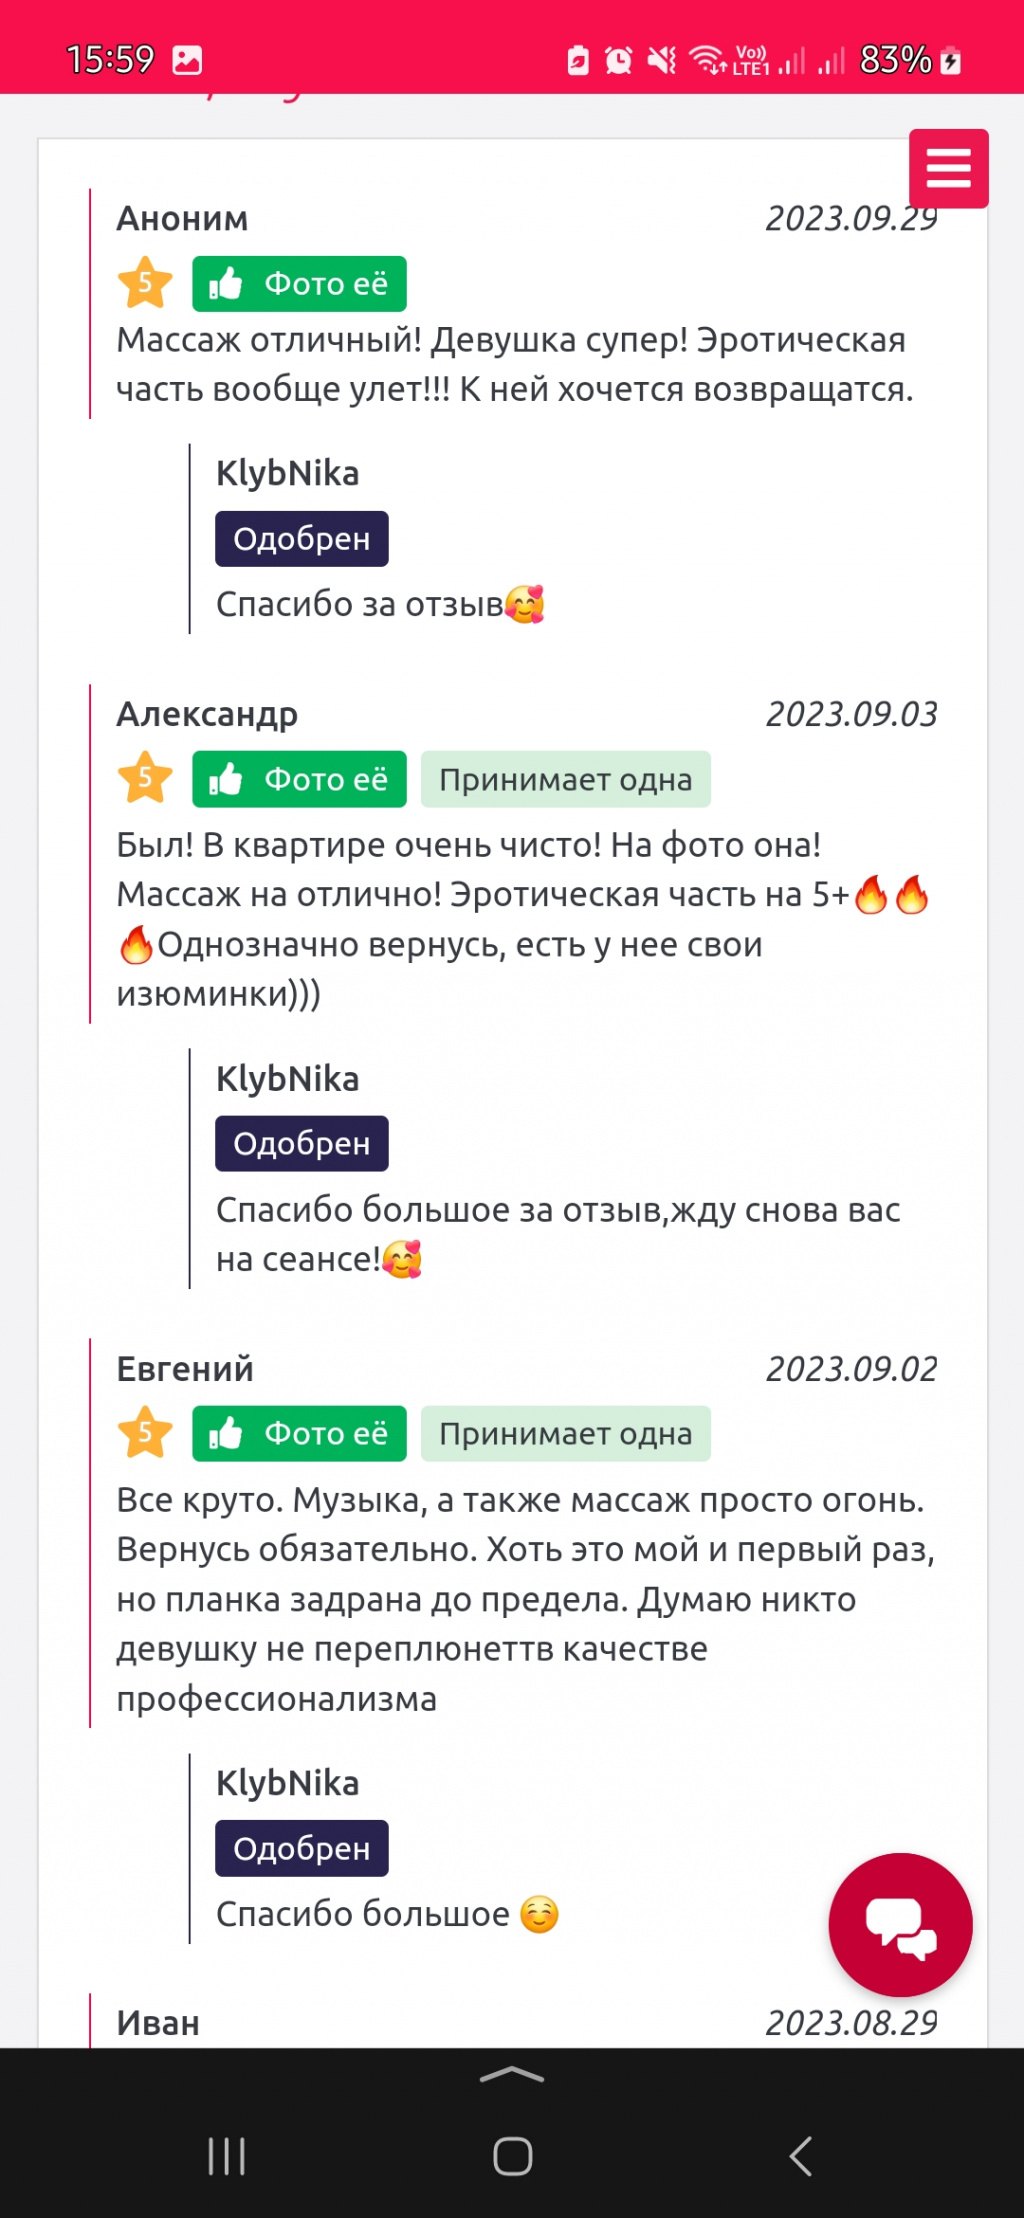 KlybNika Nika: проститутки индивидуалки в Ярославля